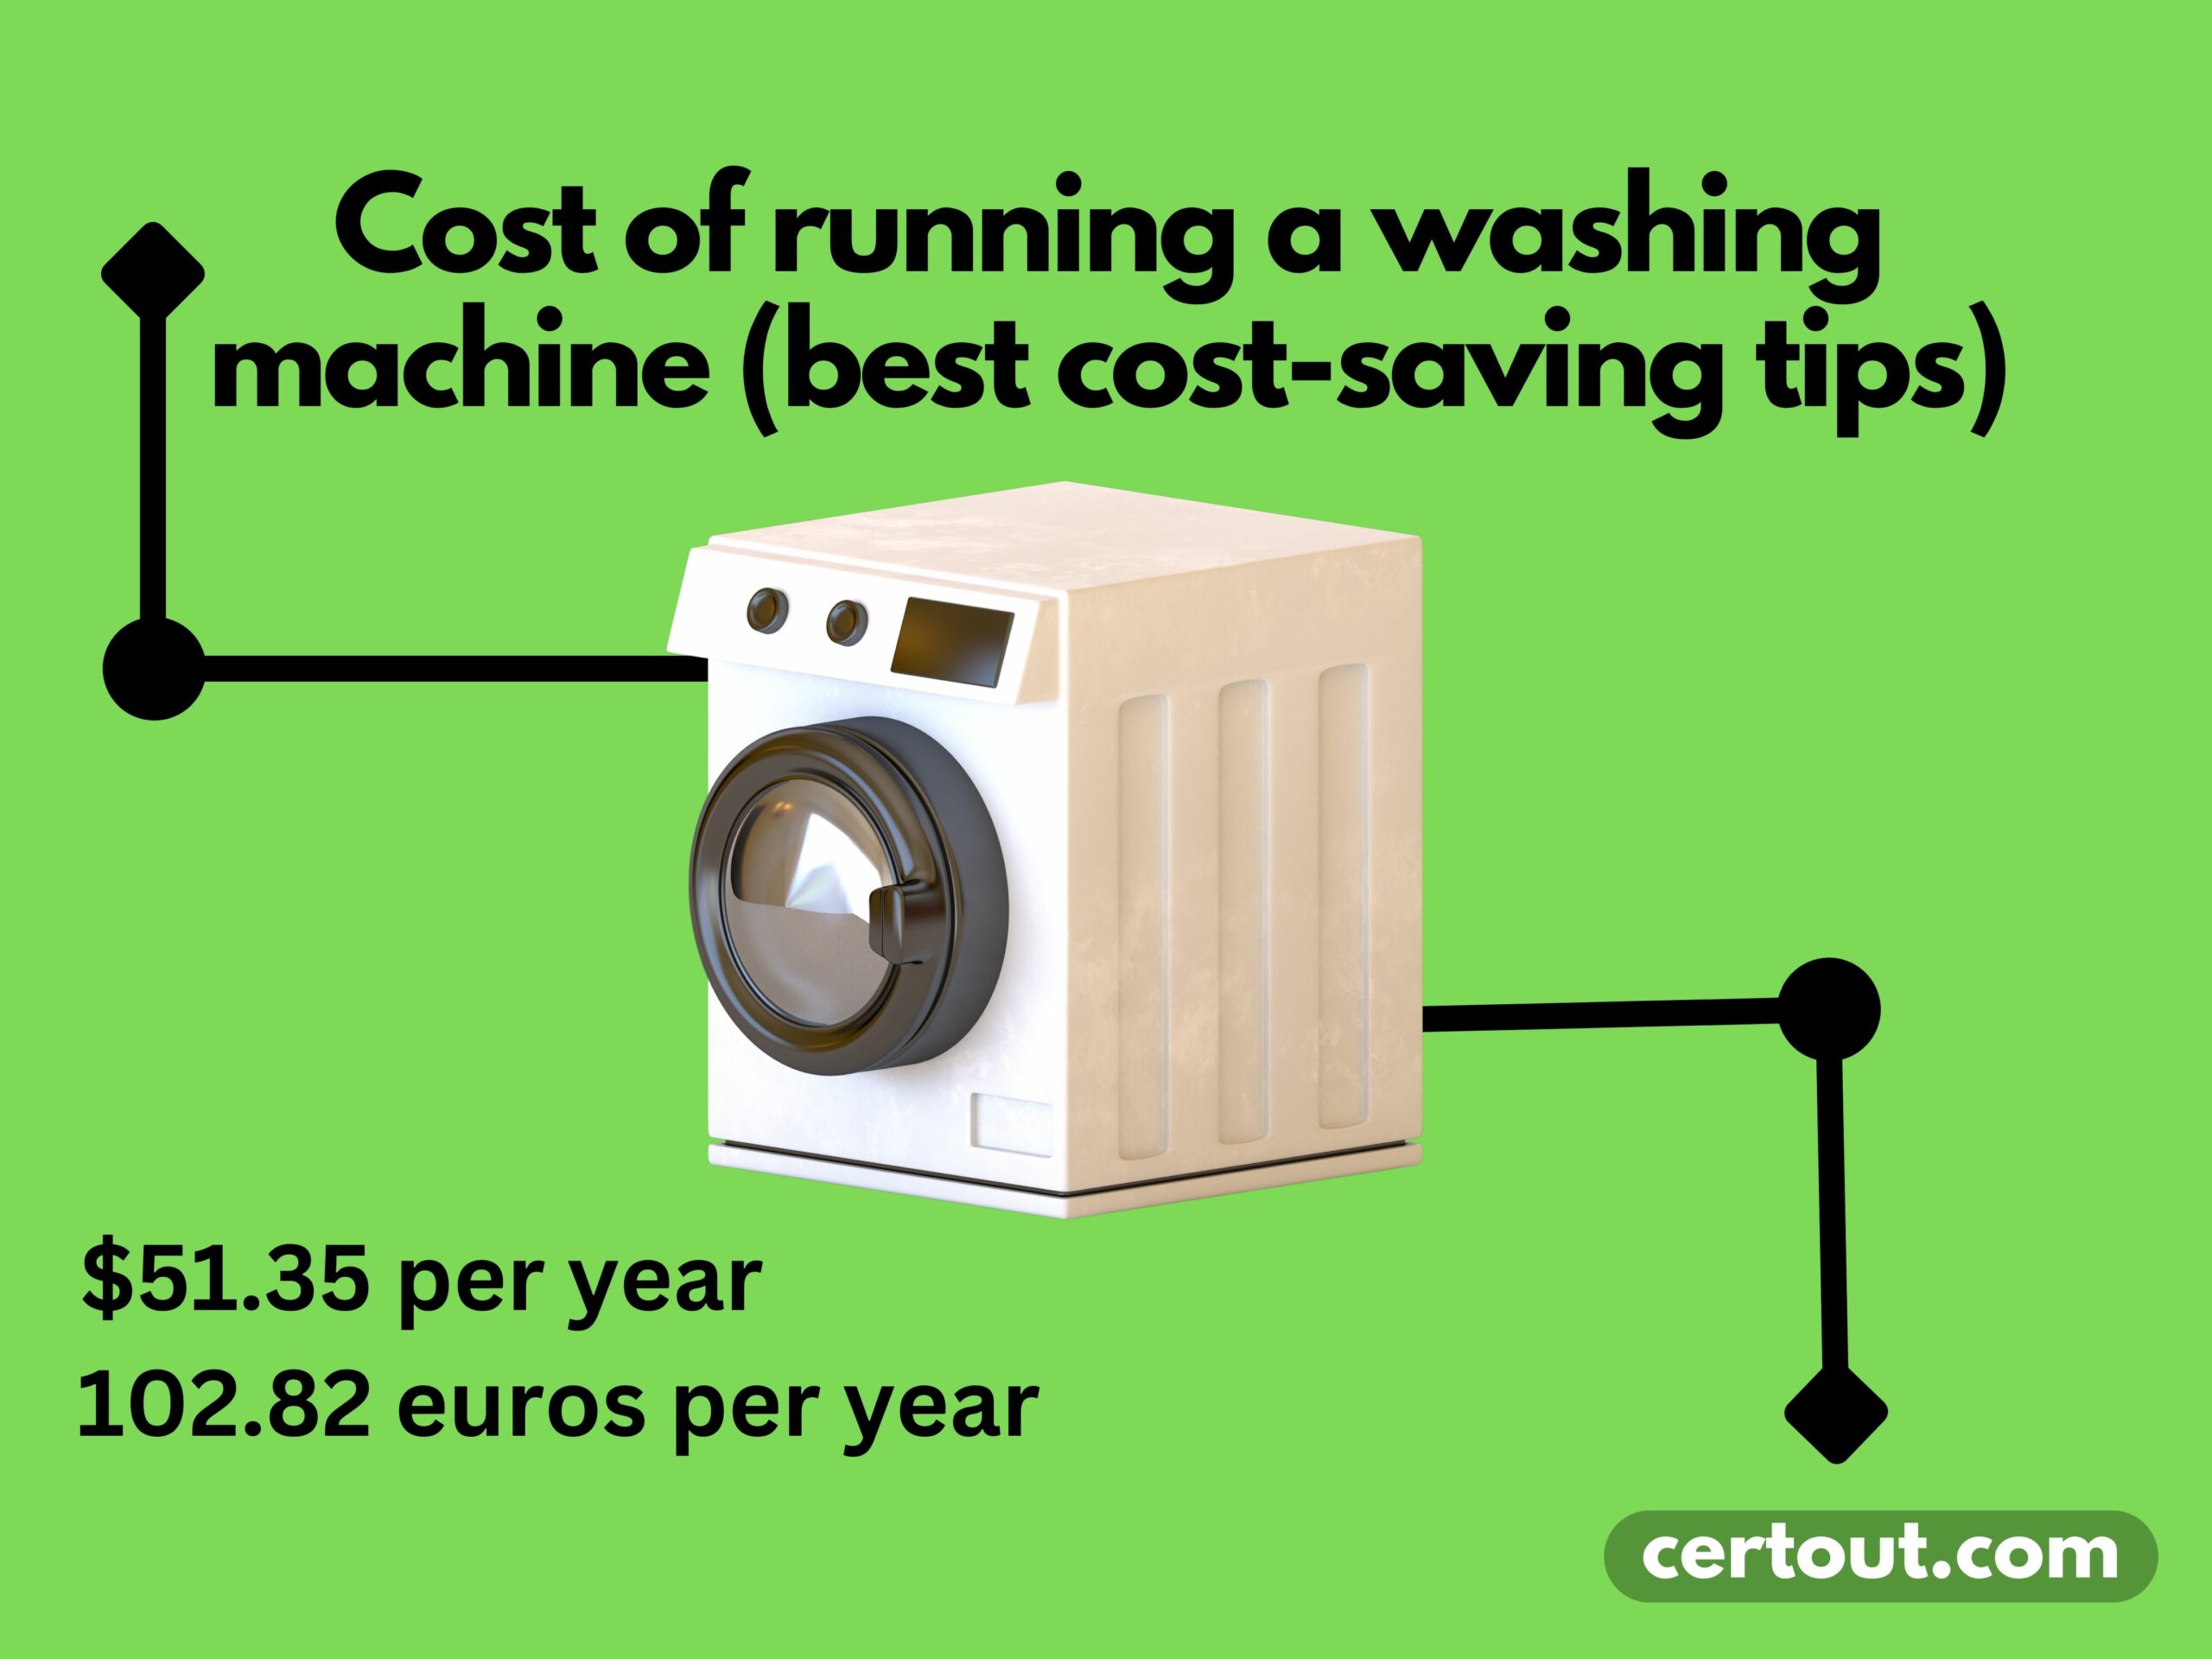 Cost of running a washing machine